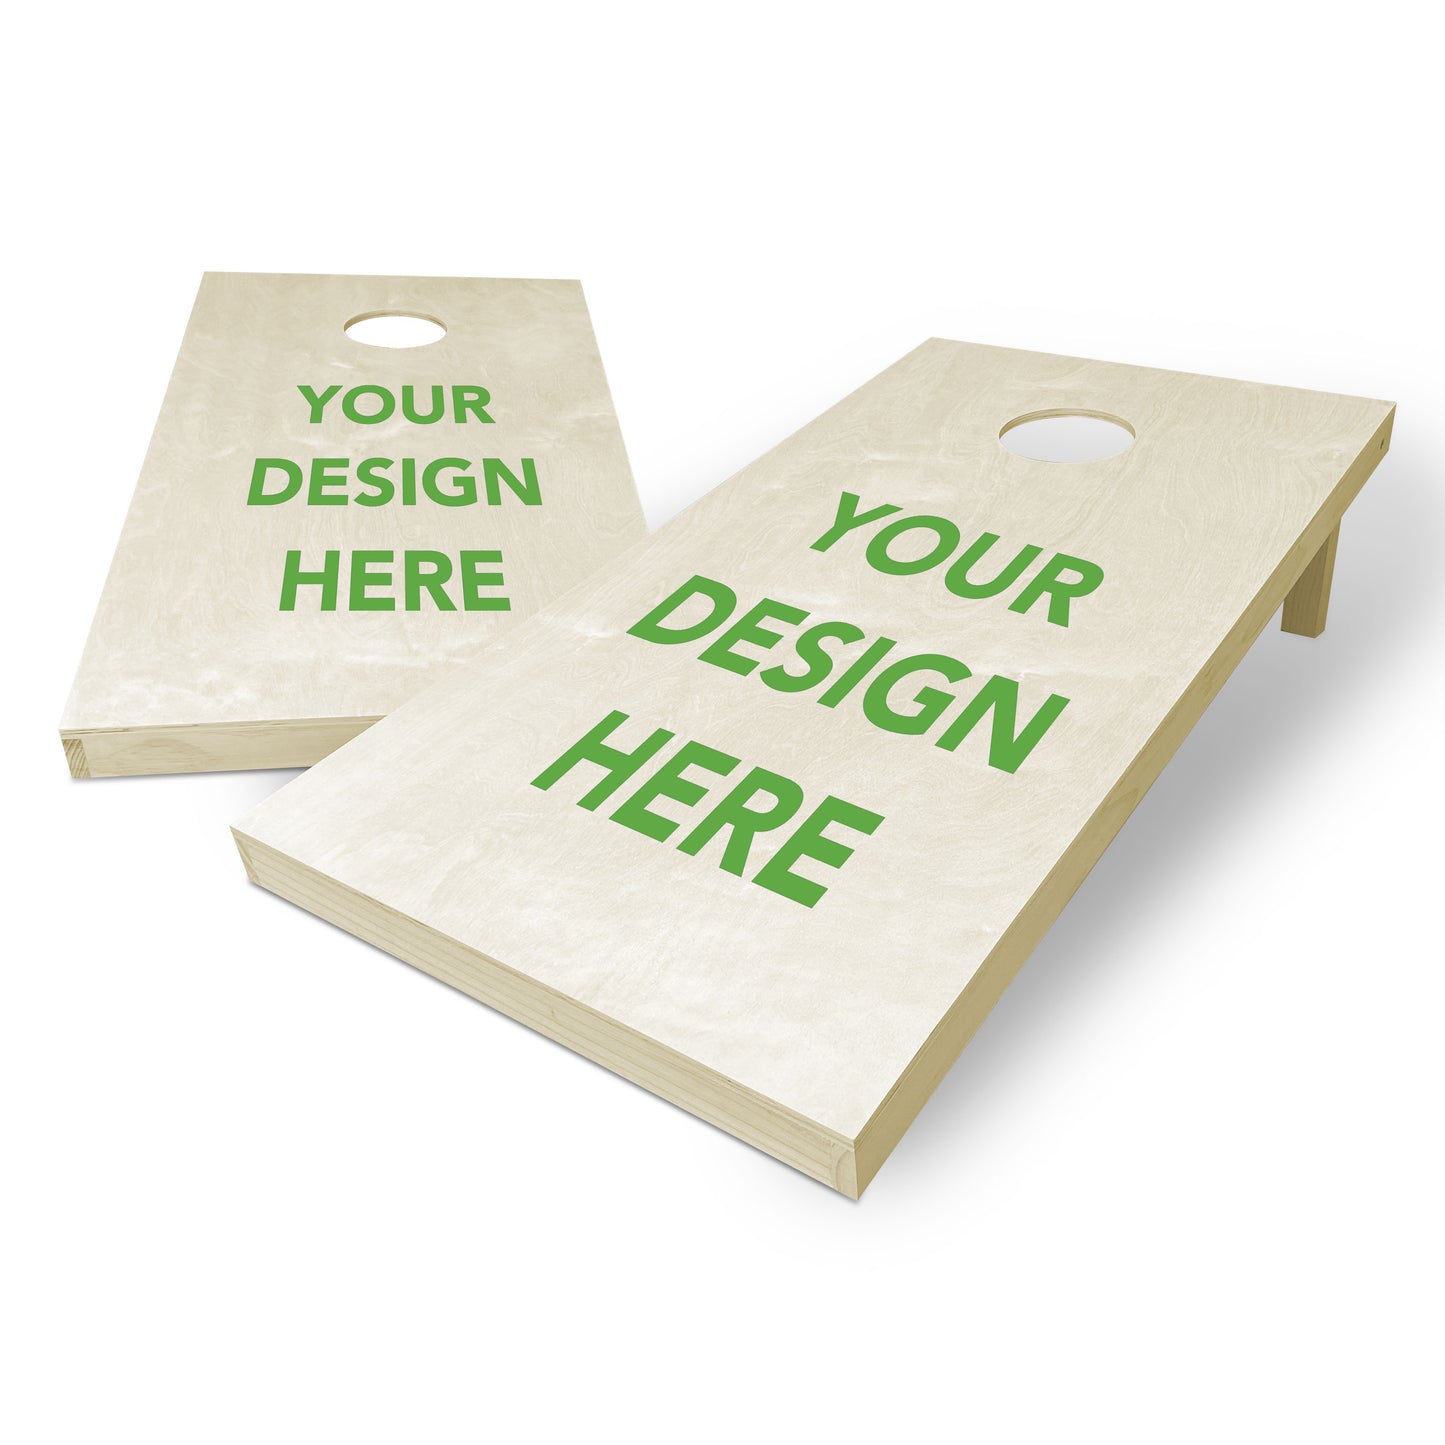 Customizable Design Regulation Size 2-ft x 4-ft Cornhole Boards